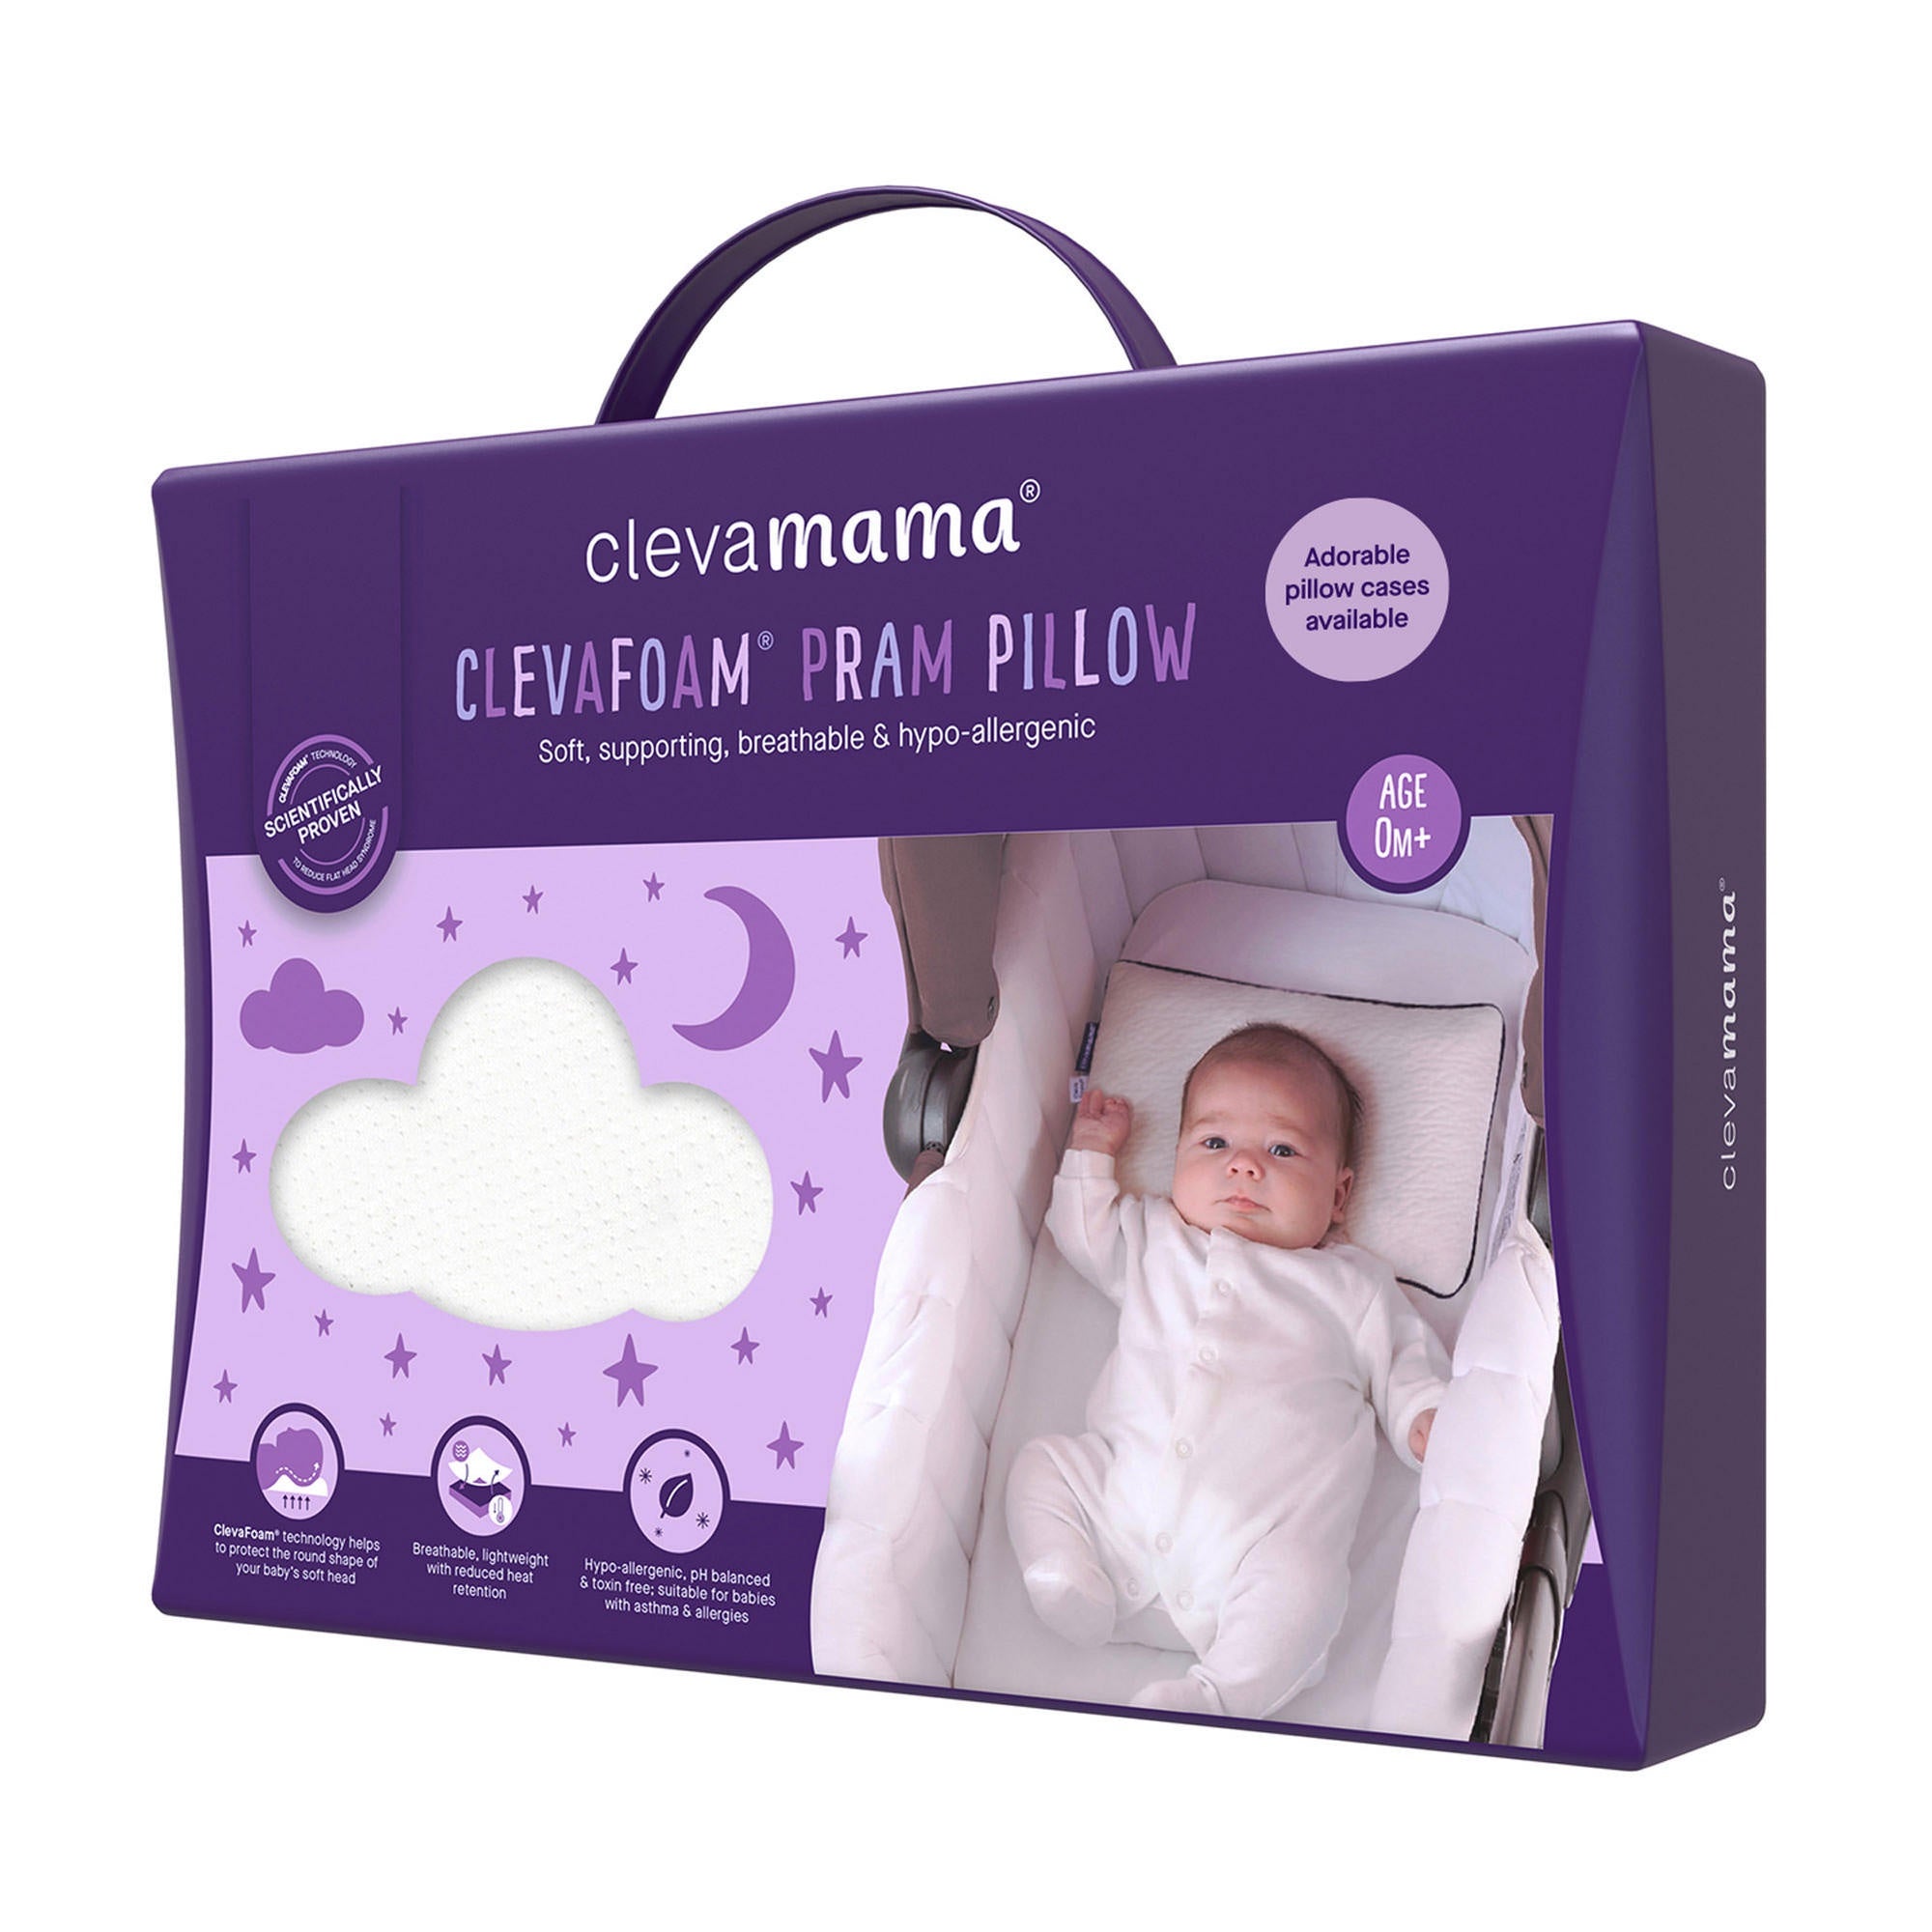 Clevamama ClevaFoam Pram Pillow